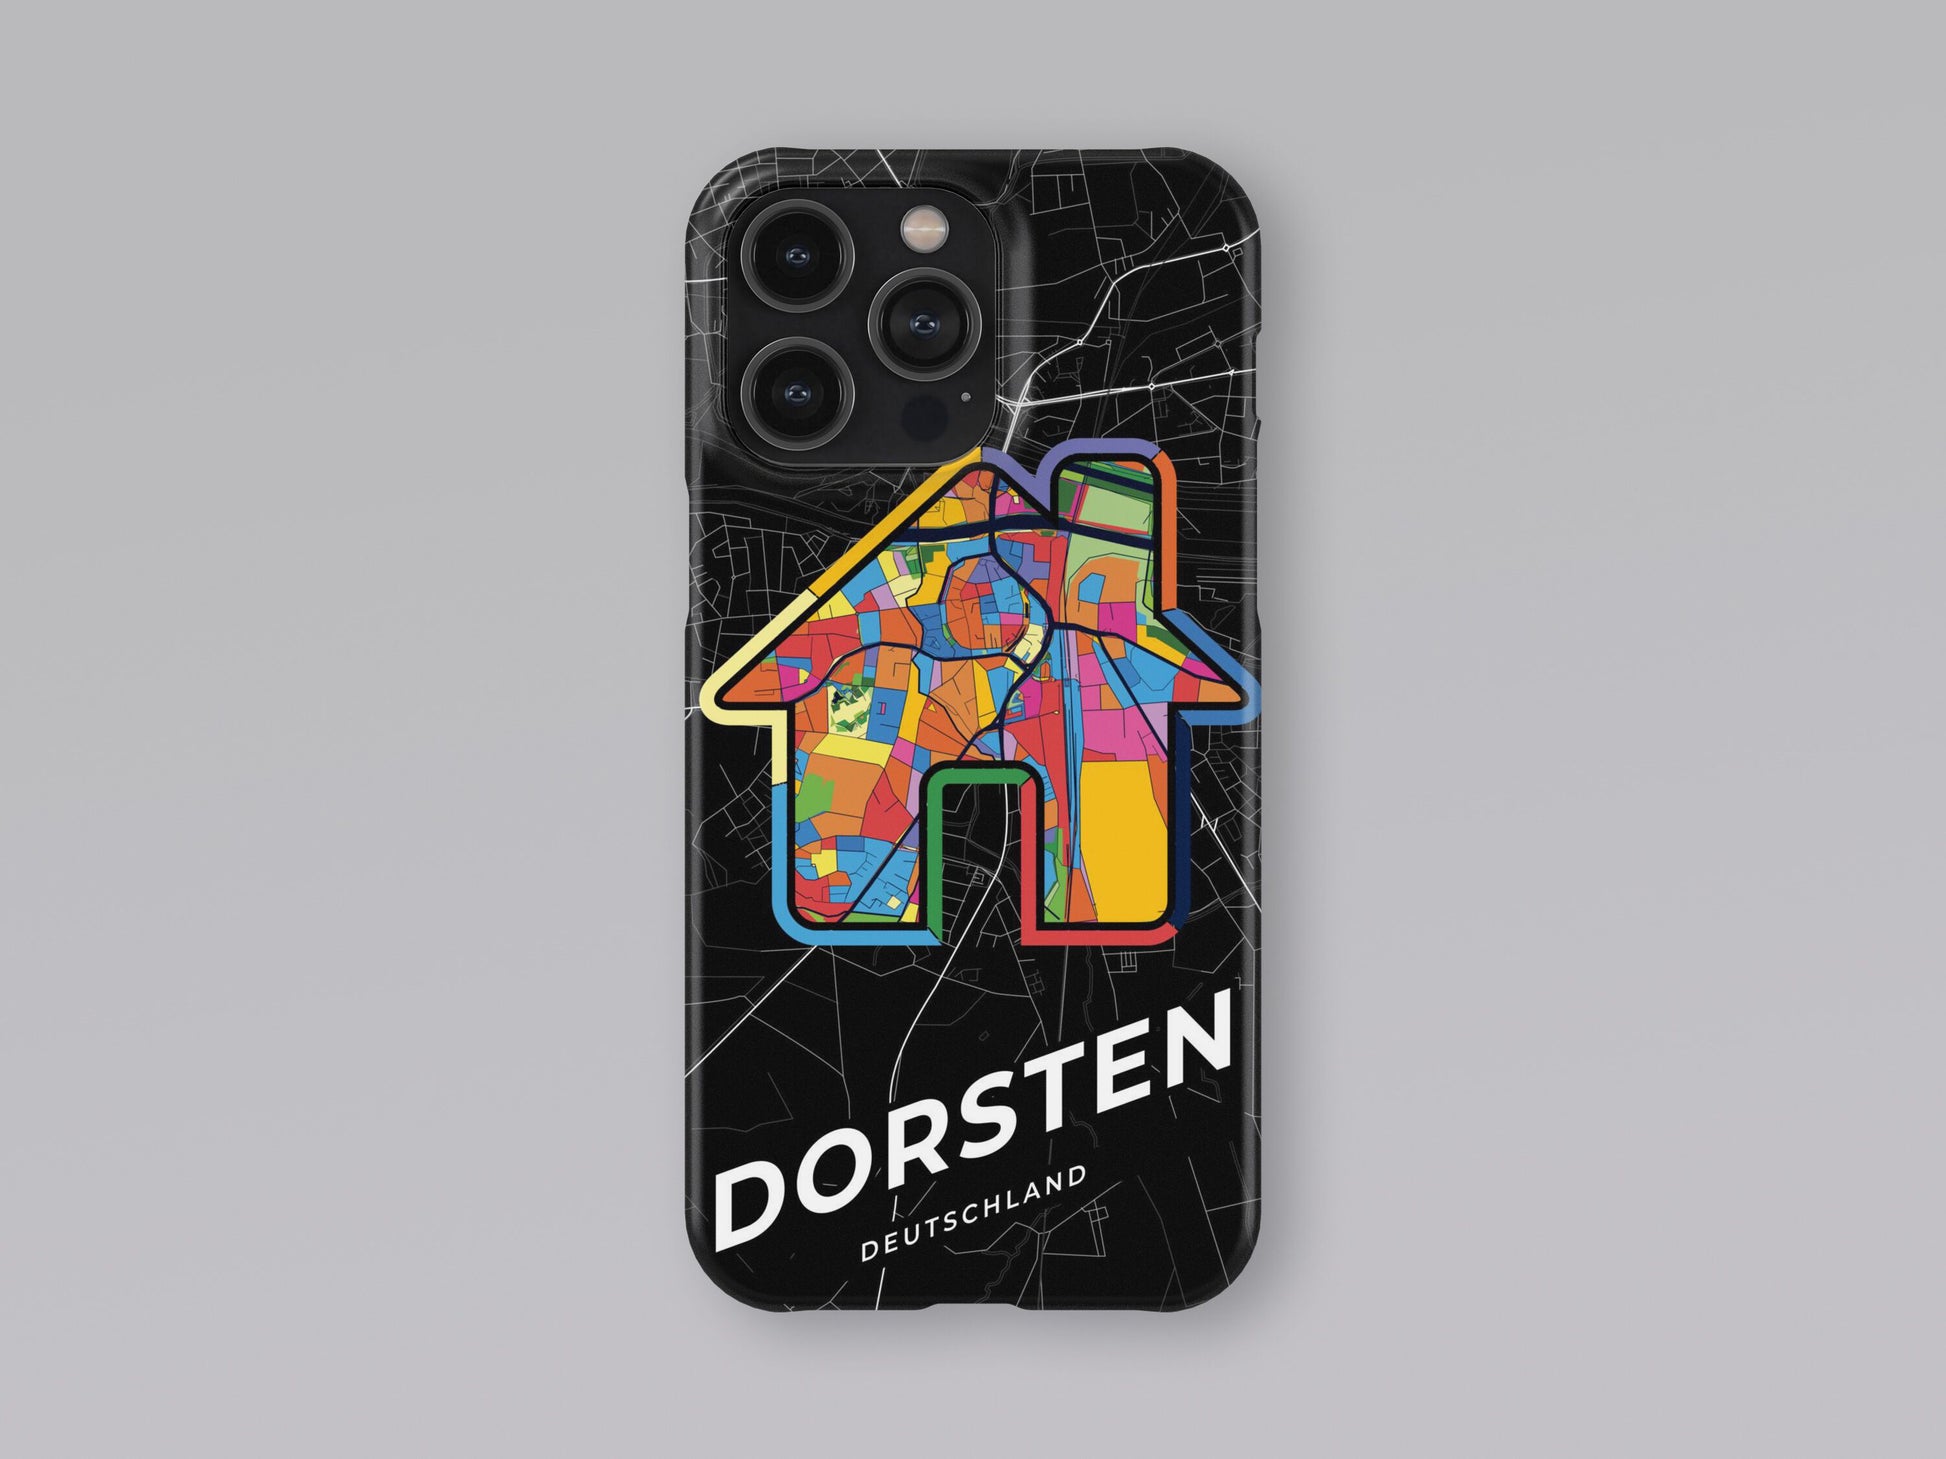 Dorsten Deutschland slim phone case with colorful icon. Birthday, wedding or housewarming gift. Couple match cases. 3